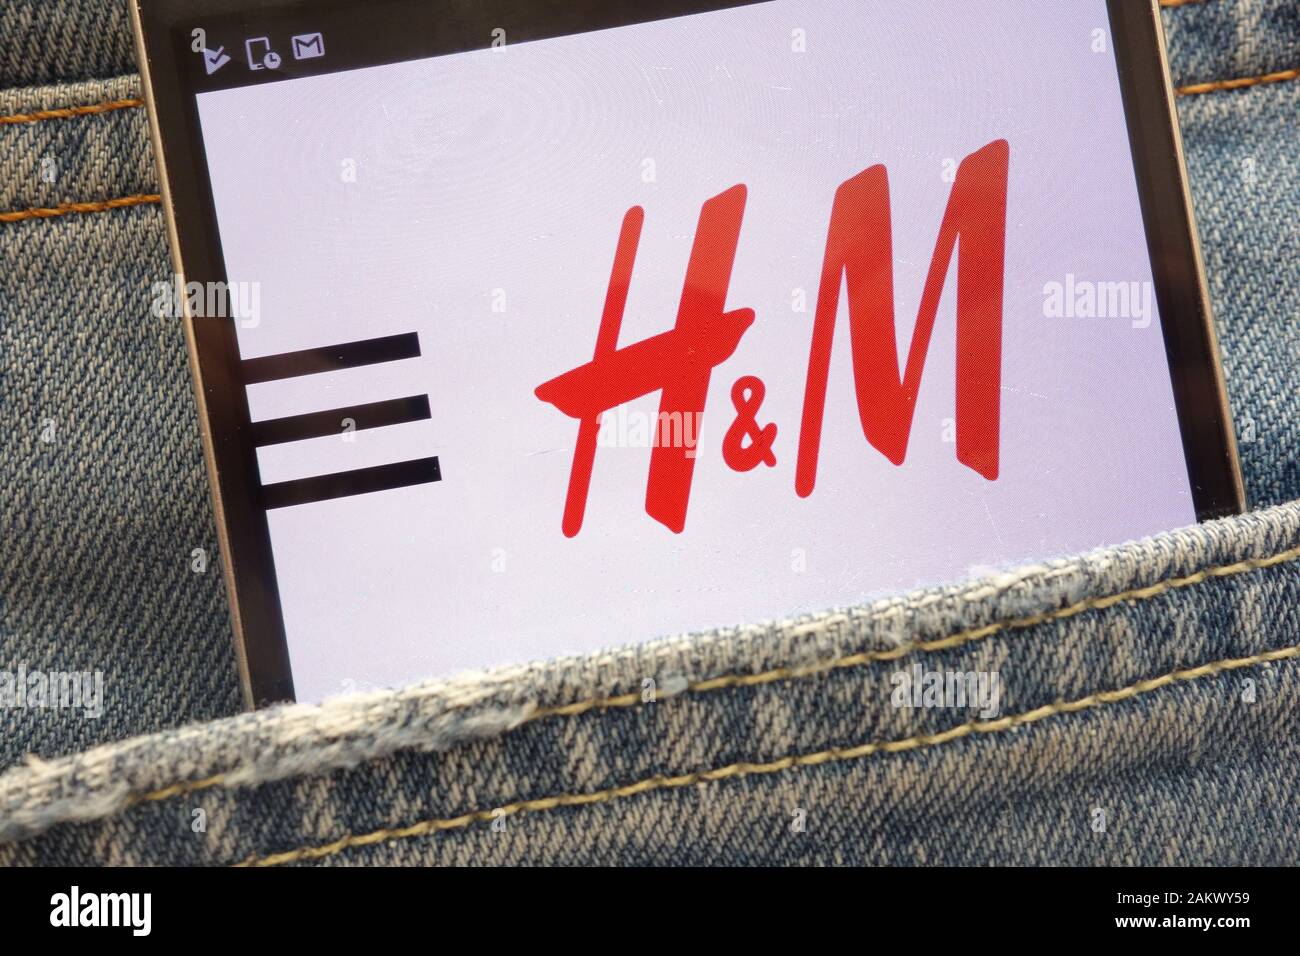 H&M website displayed on smartphone hidden in jeans pocket Stock Photo